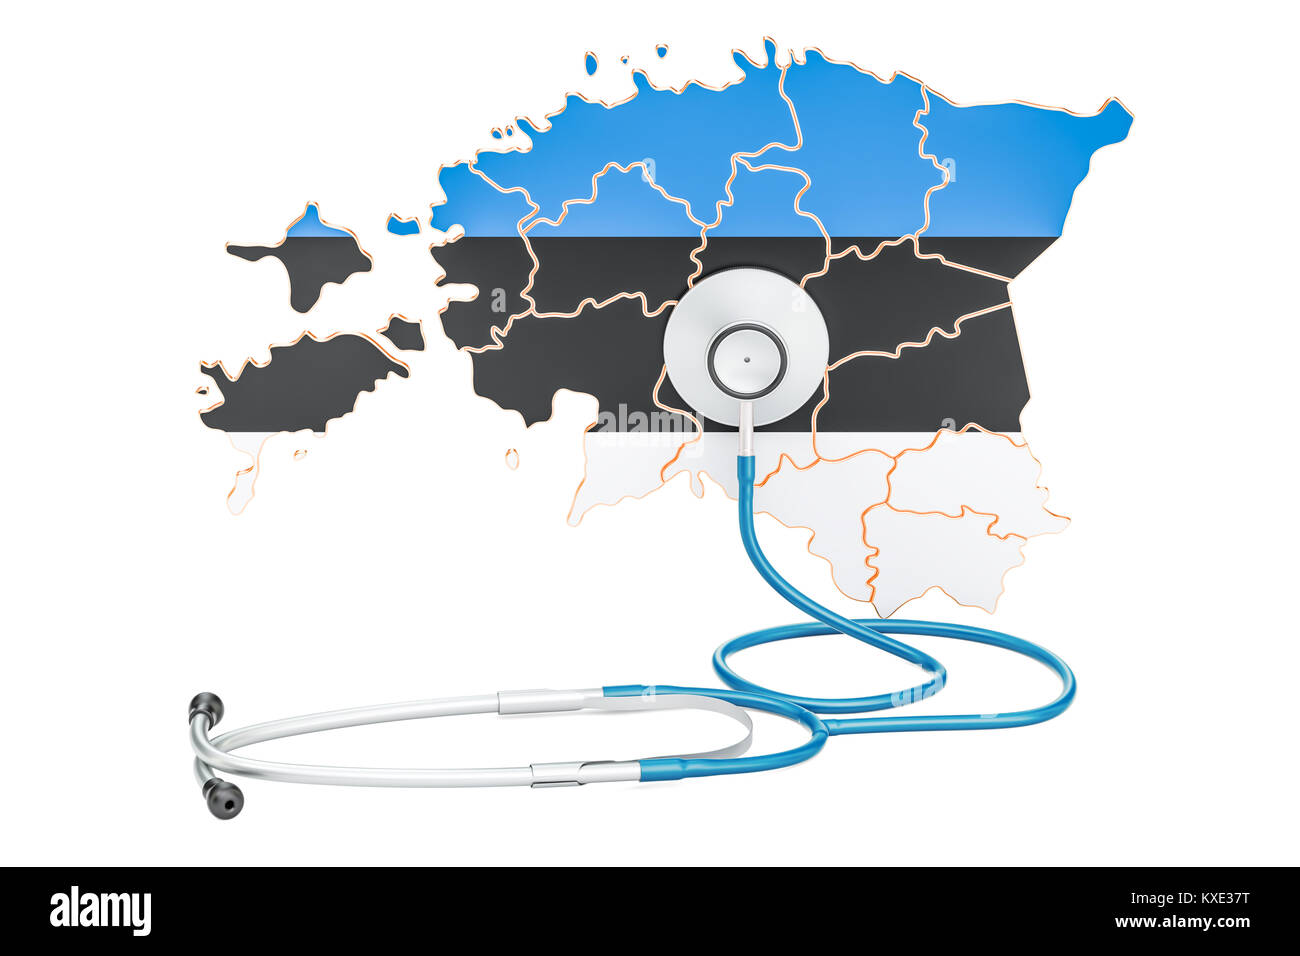 Estnische Karte mit Stethoskop, national Health Care Concept, 3D-Rendering Stockfoto